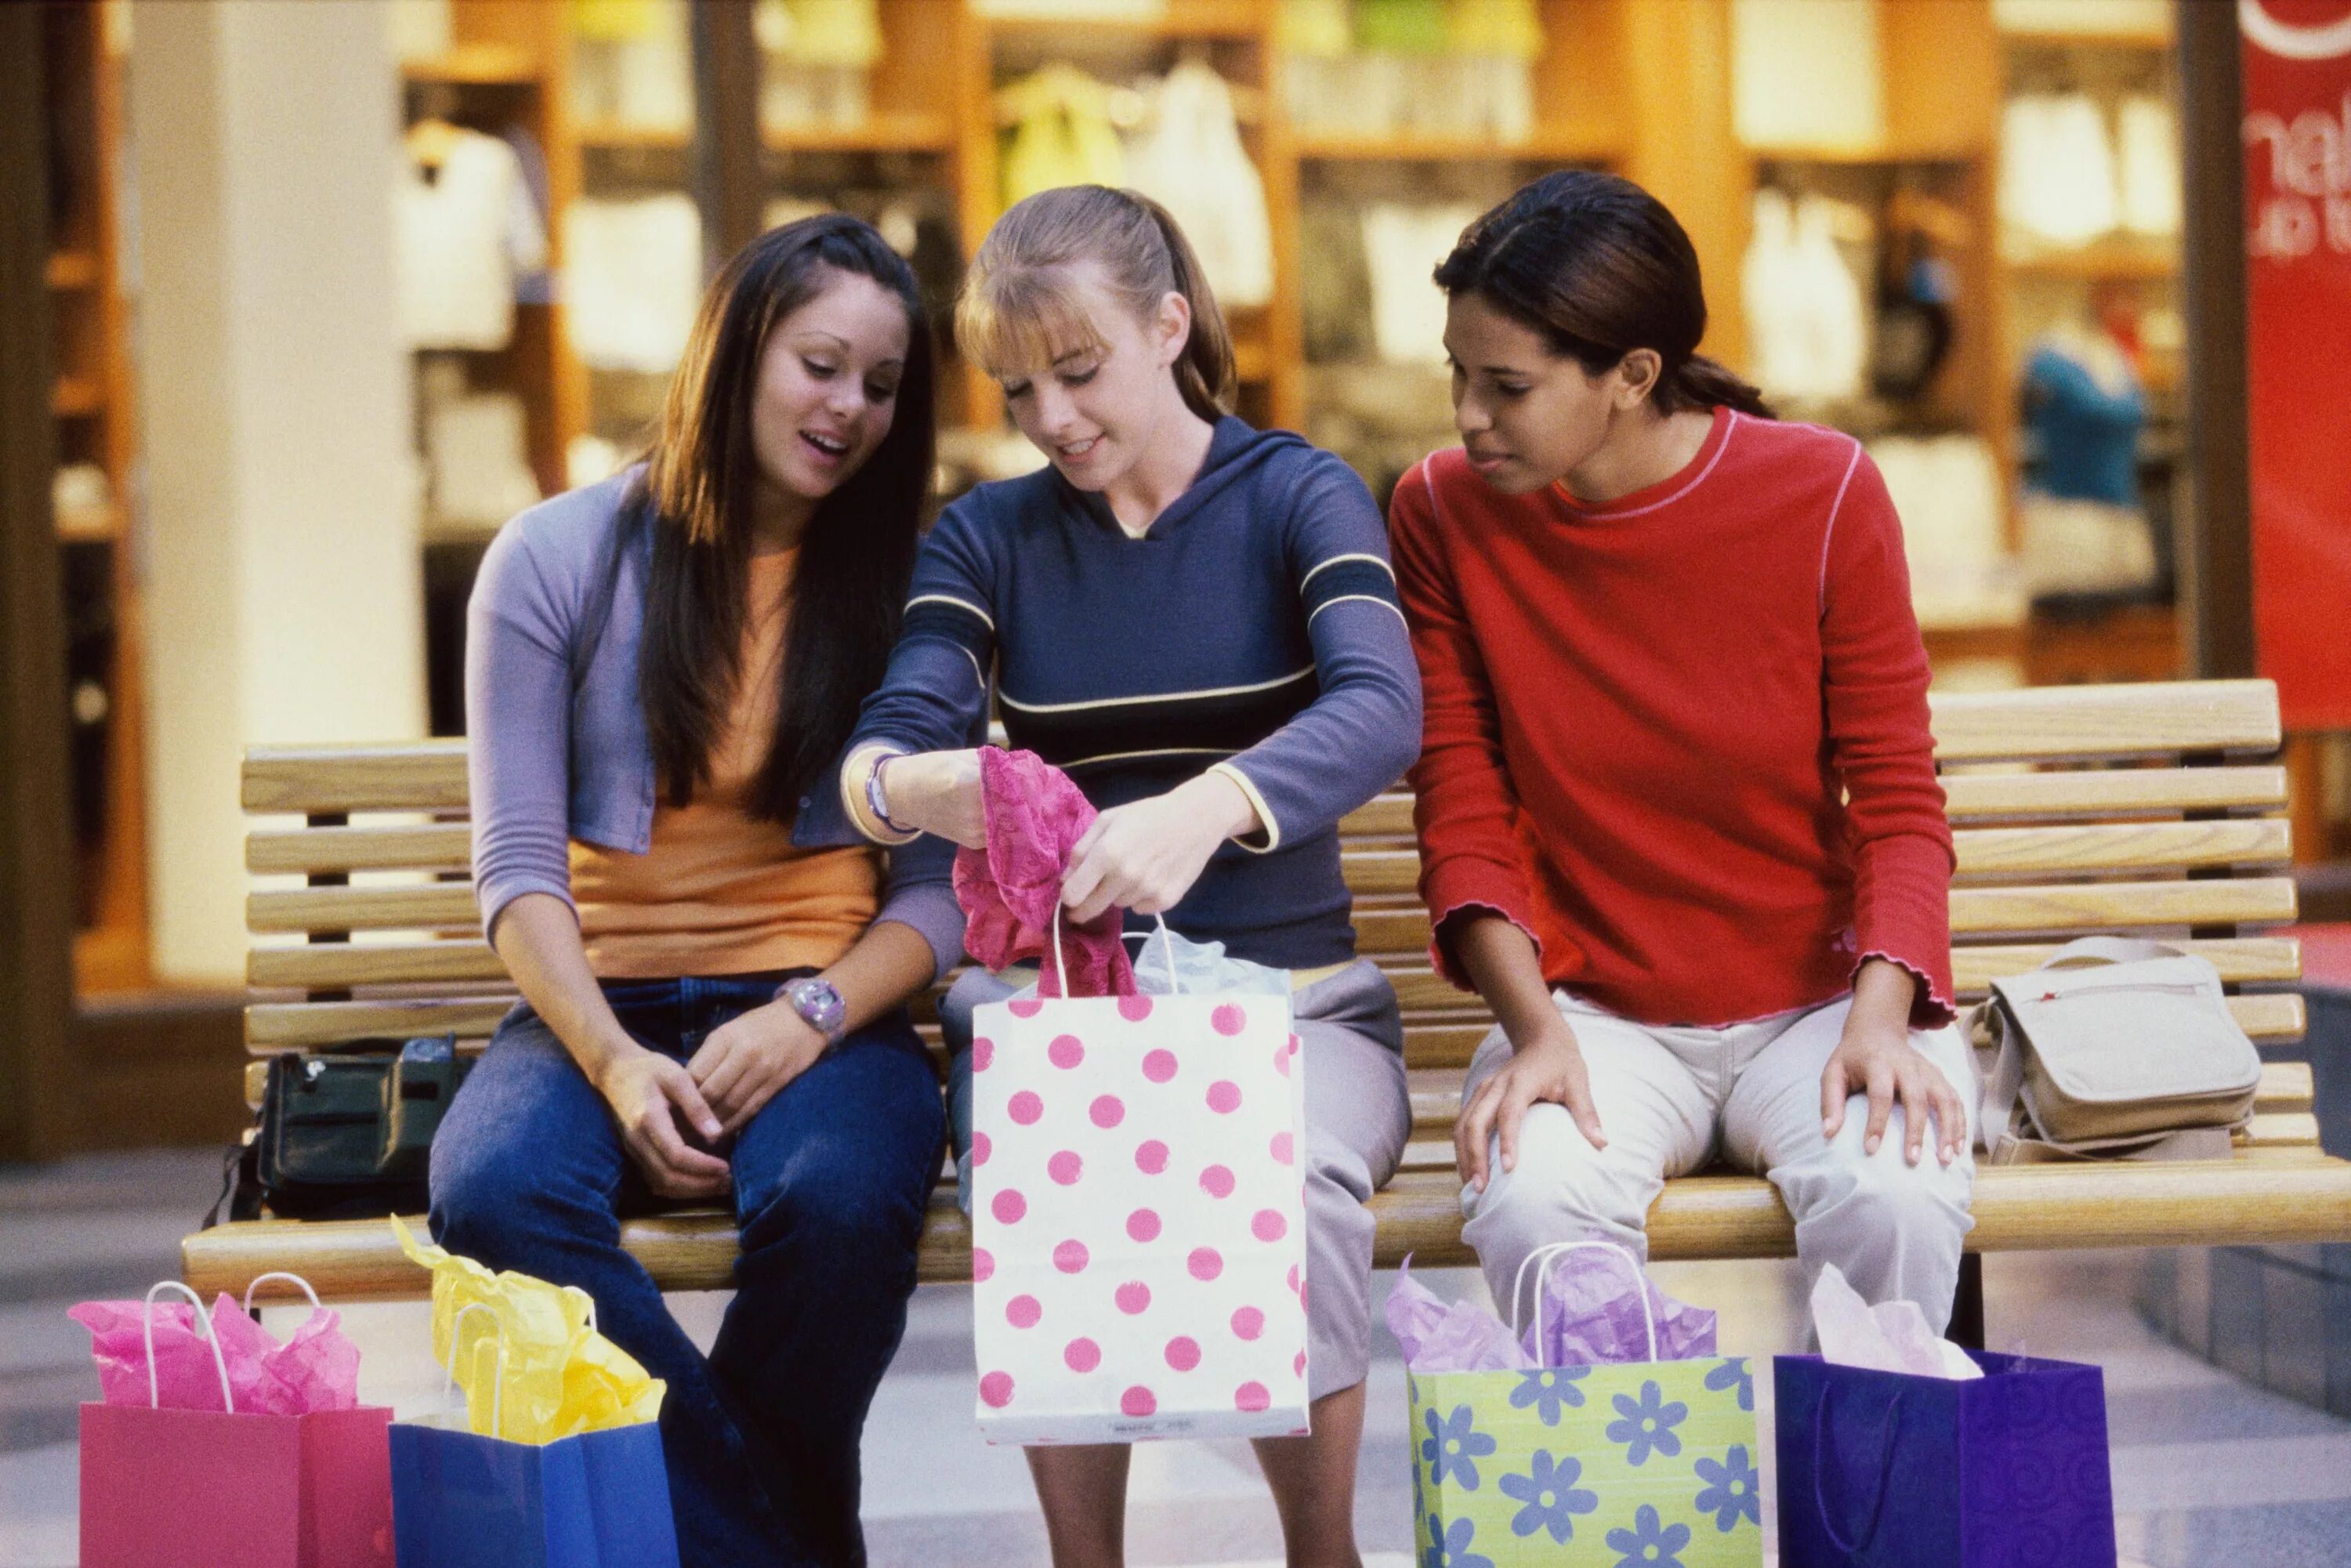 You often go shopping. Шоппинг подростки. Подросток на шопинге с мамой. Дети шоппинг. Шоппинг подросток с родителями.